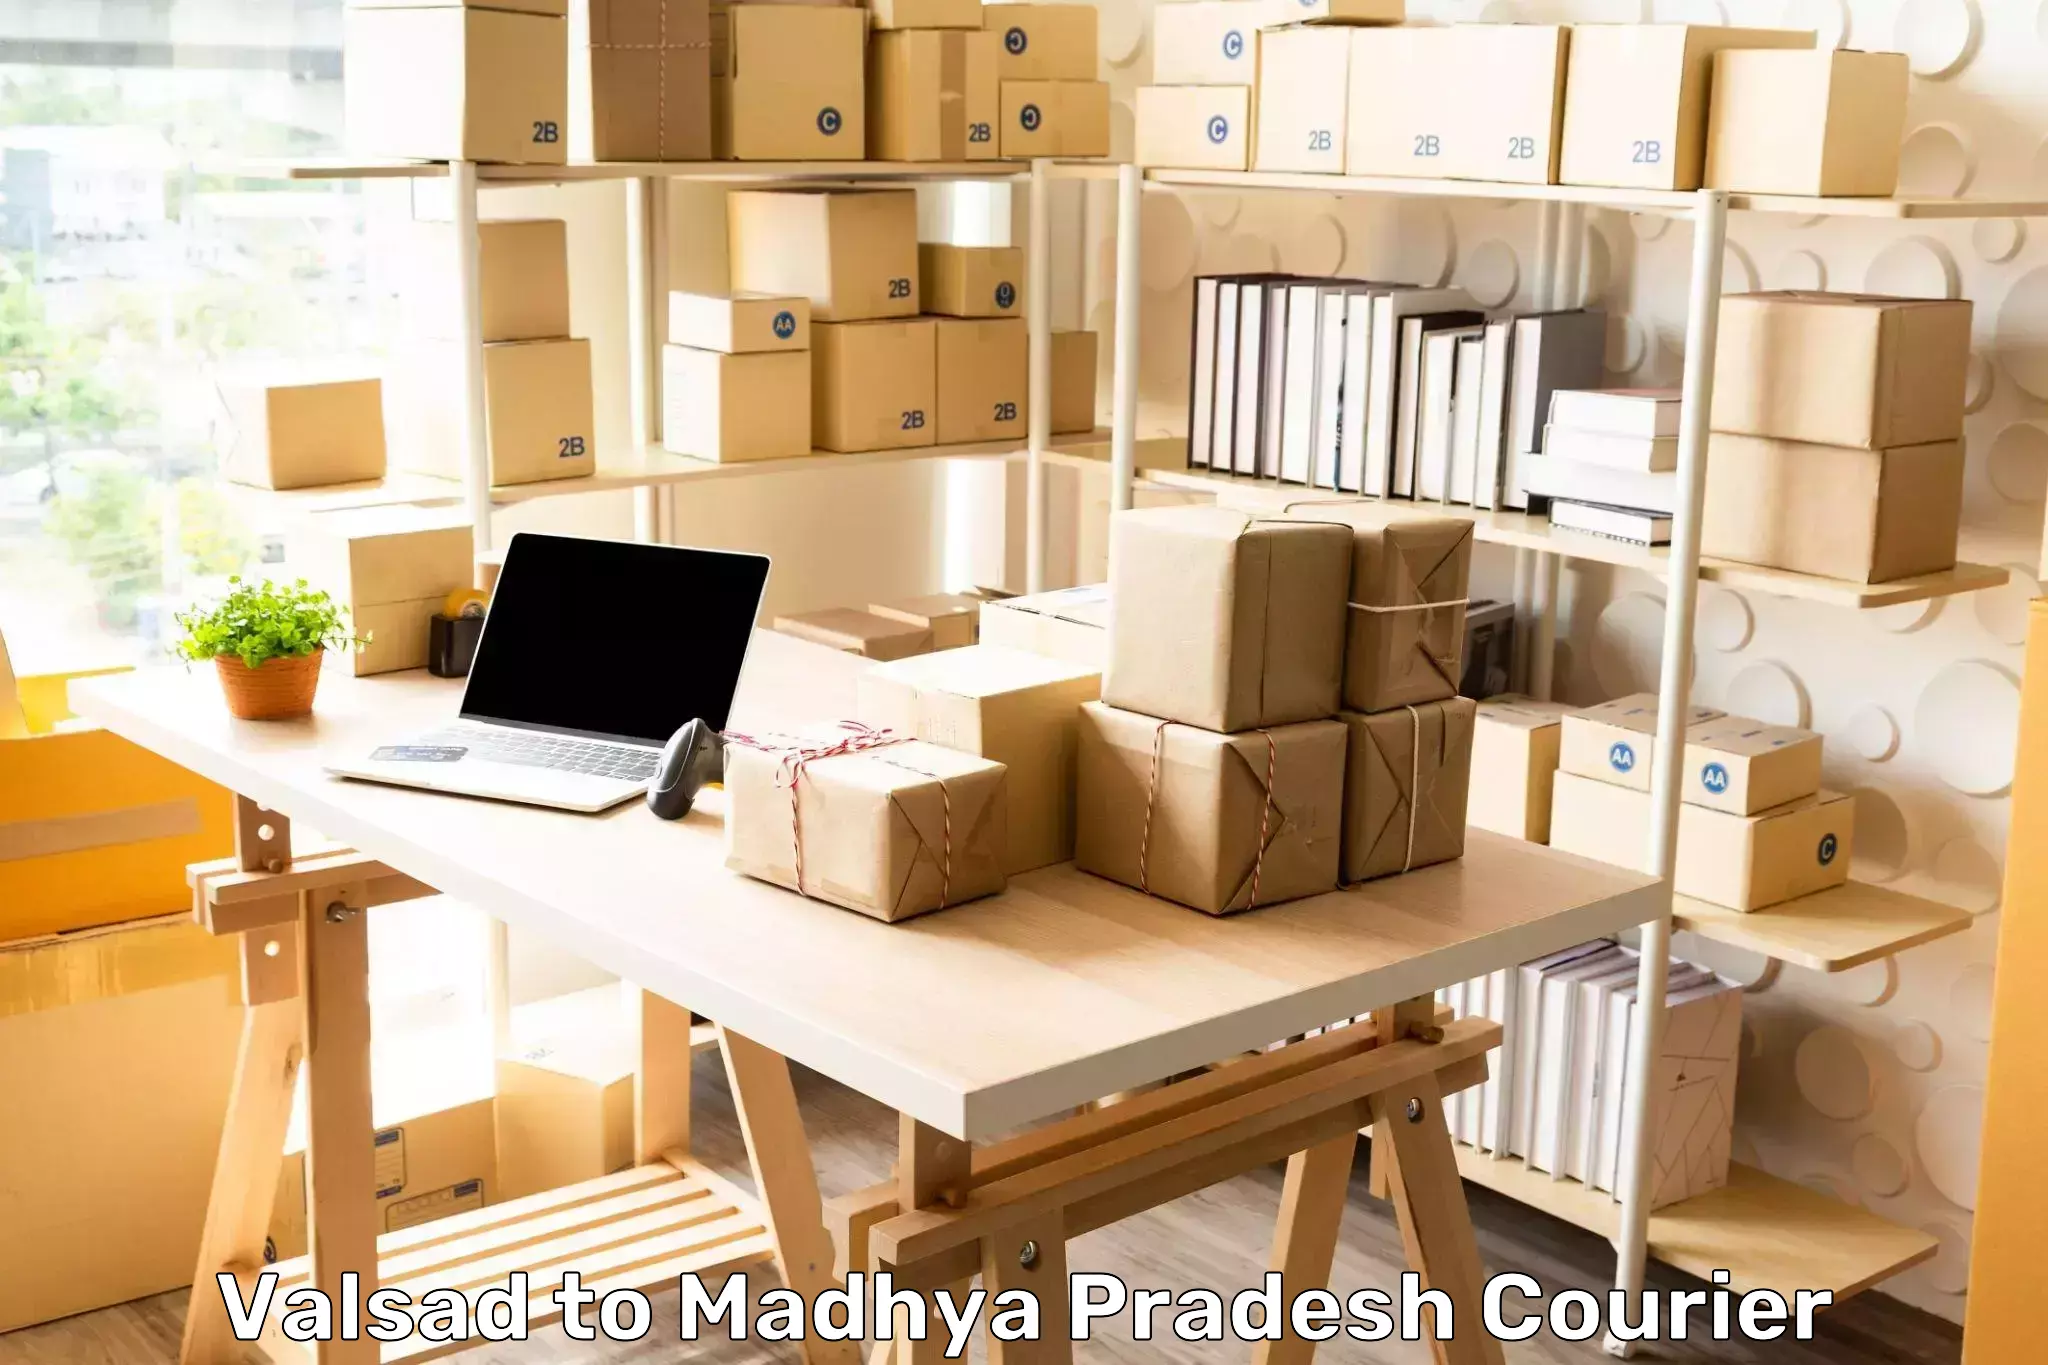 User-friendly delivery service Valsad to Madhya Pradesh